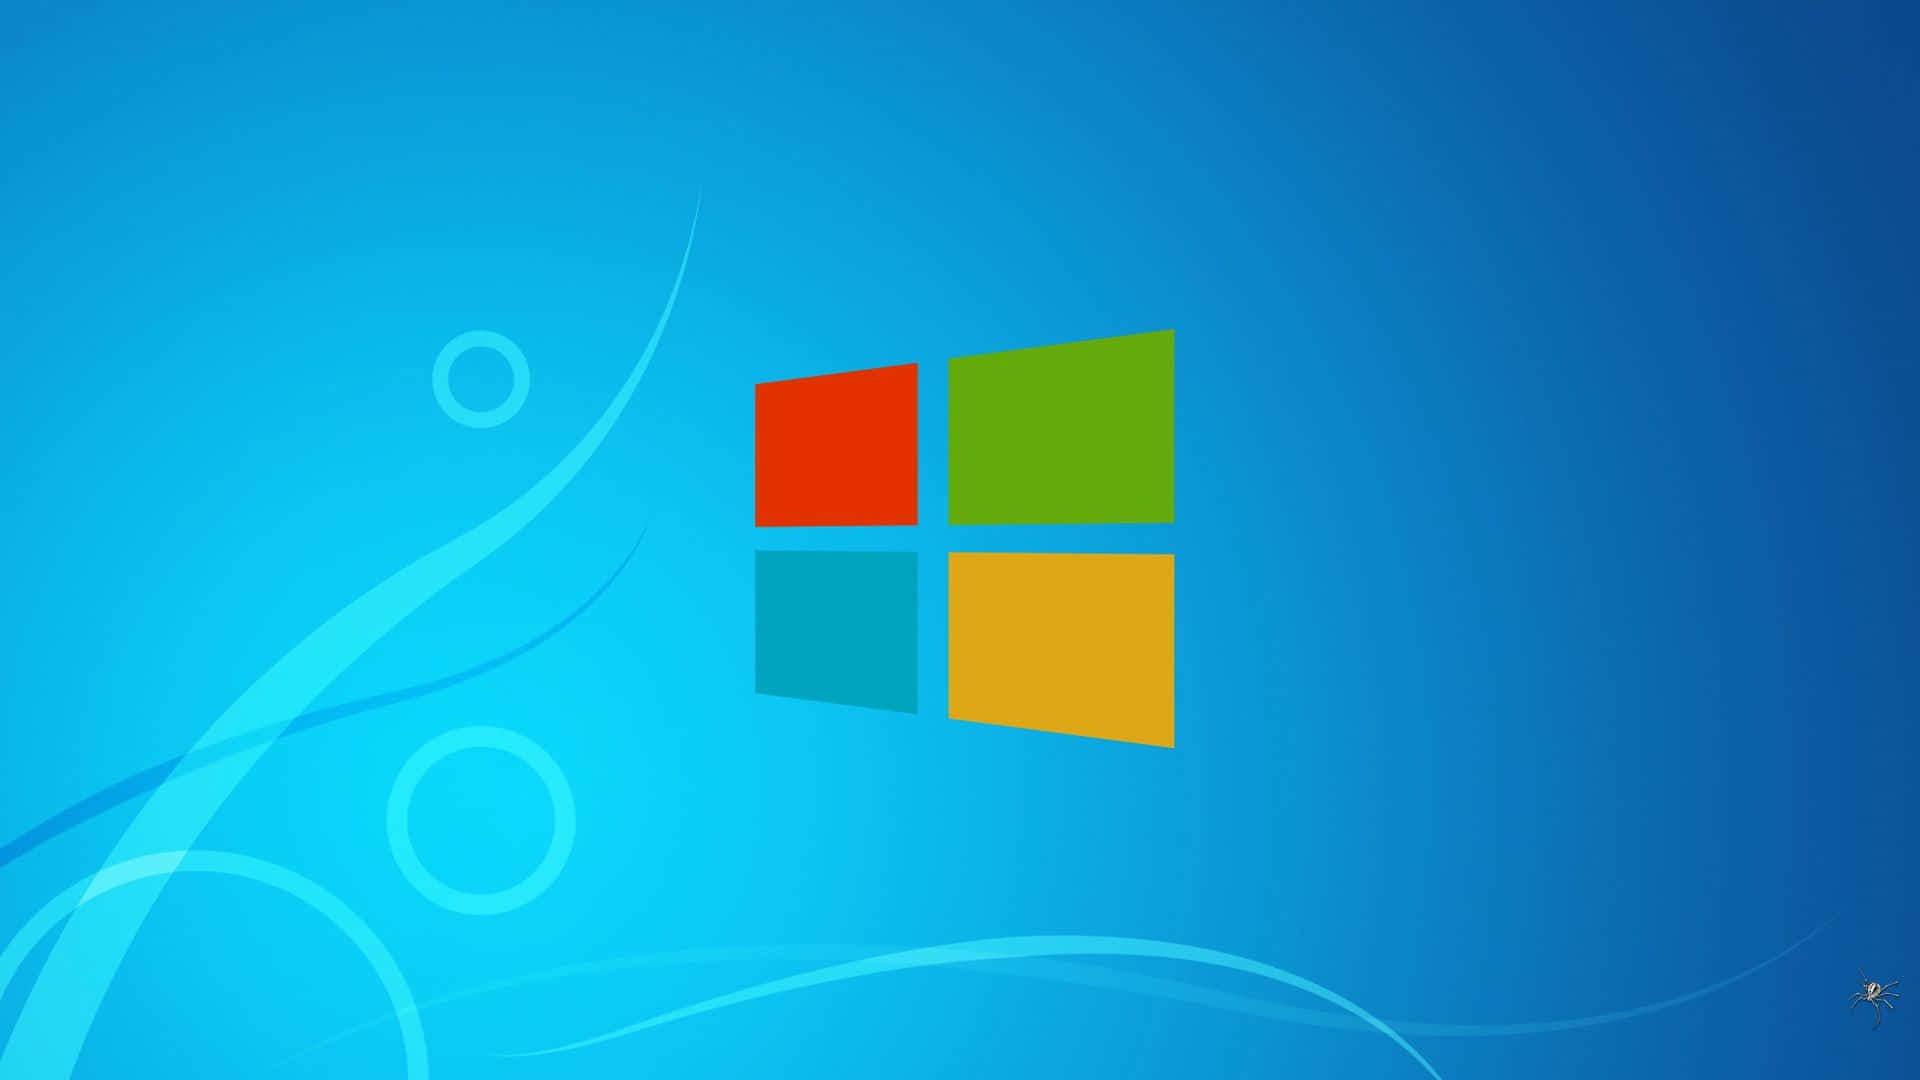 Windows 10 Logo On A Blue Background Background